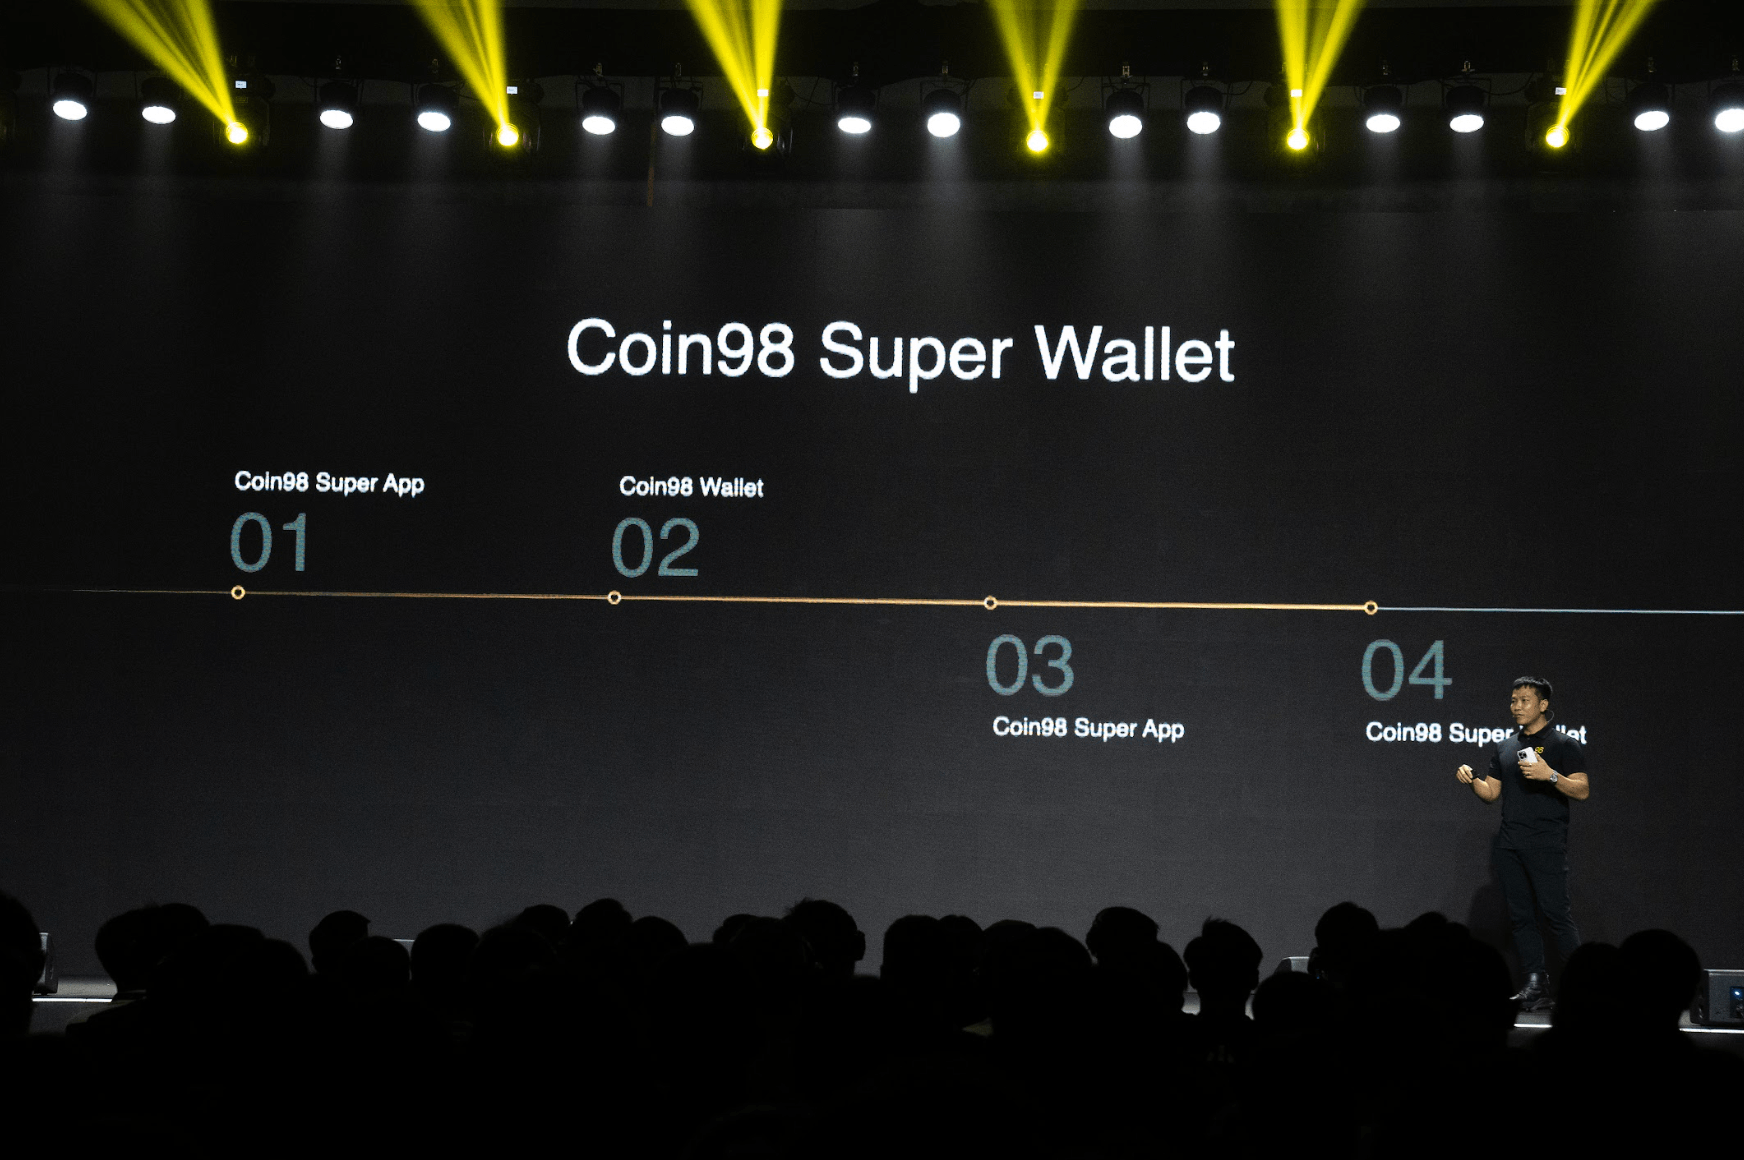 coin98 super wallet